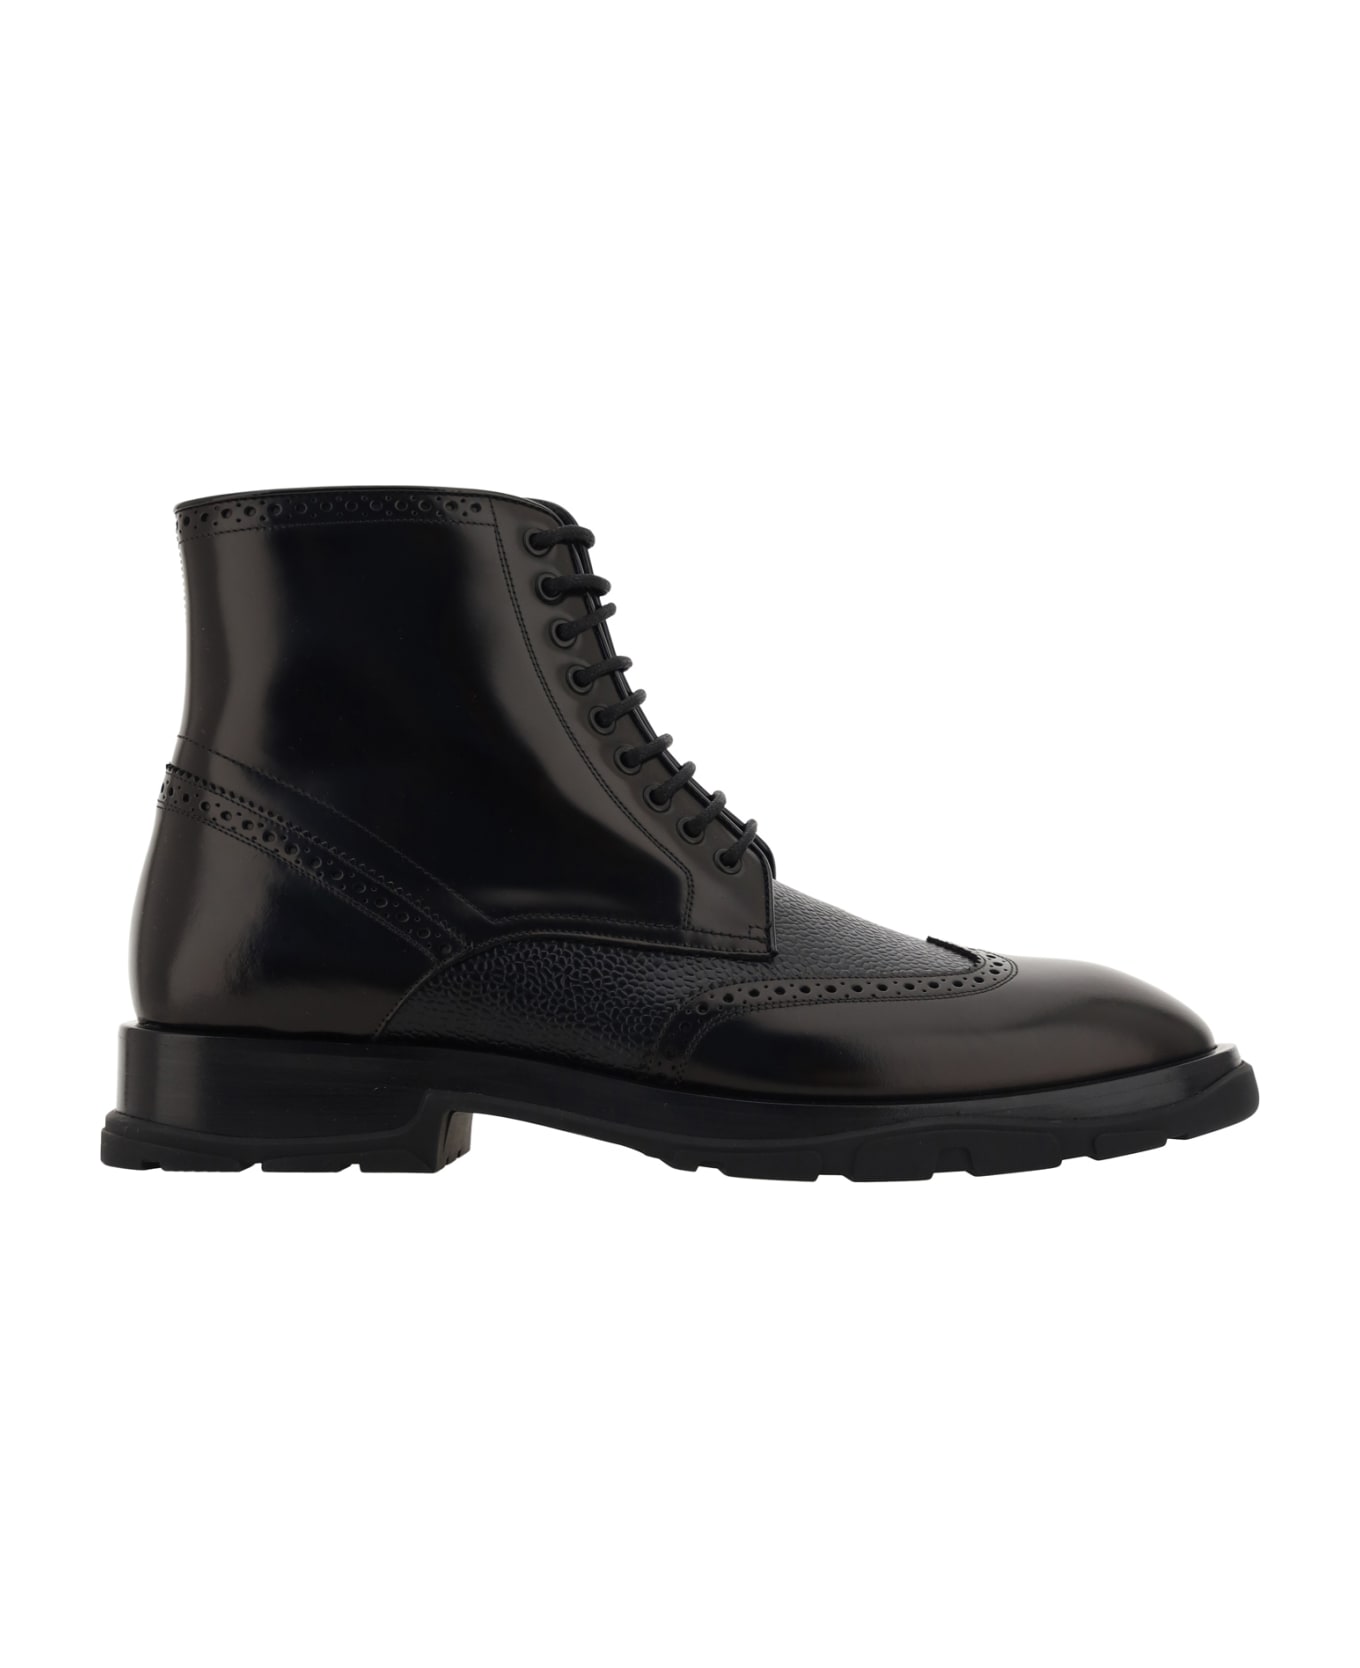 Alexander McQueen Lace Up Boots - Black/black/black ブーツ